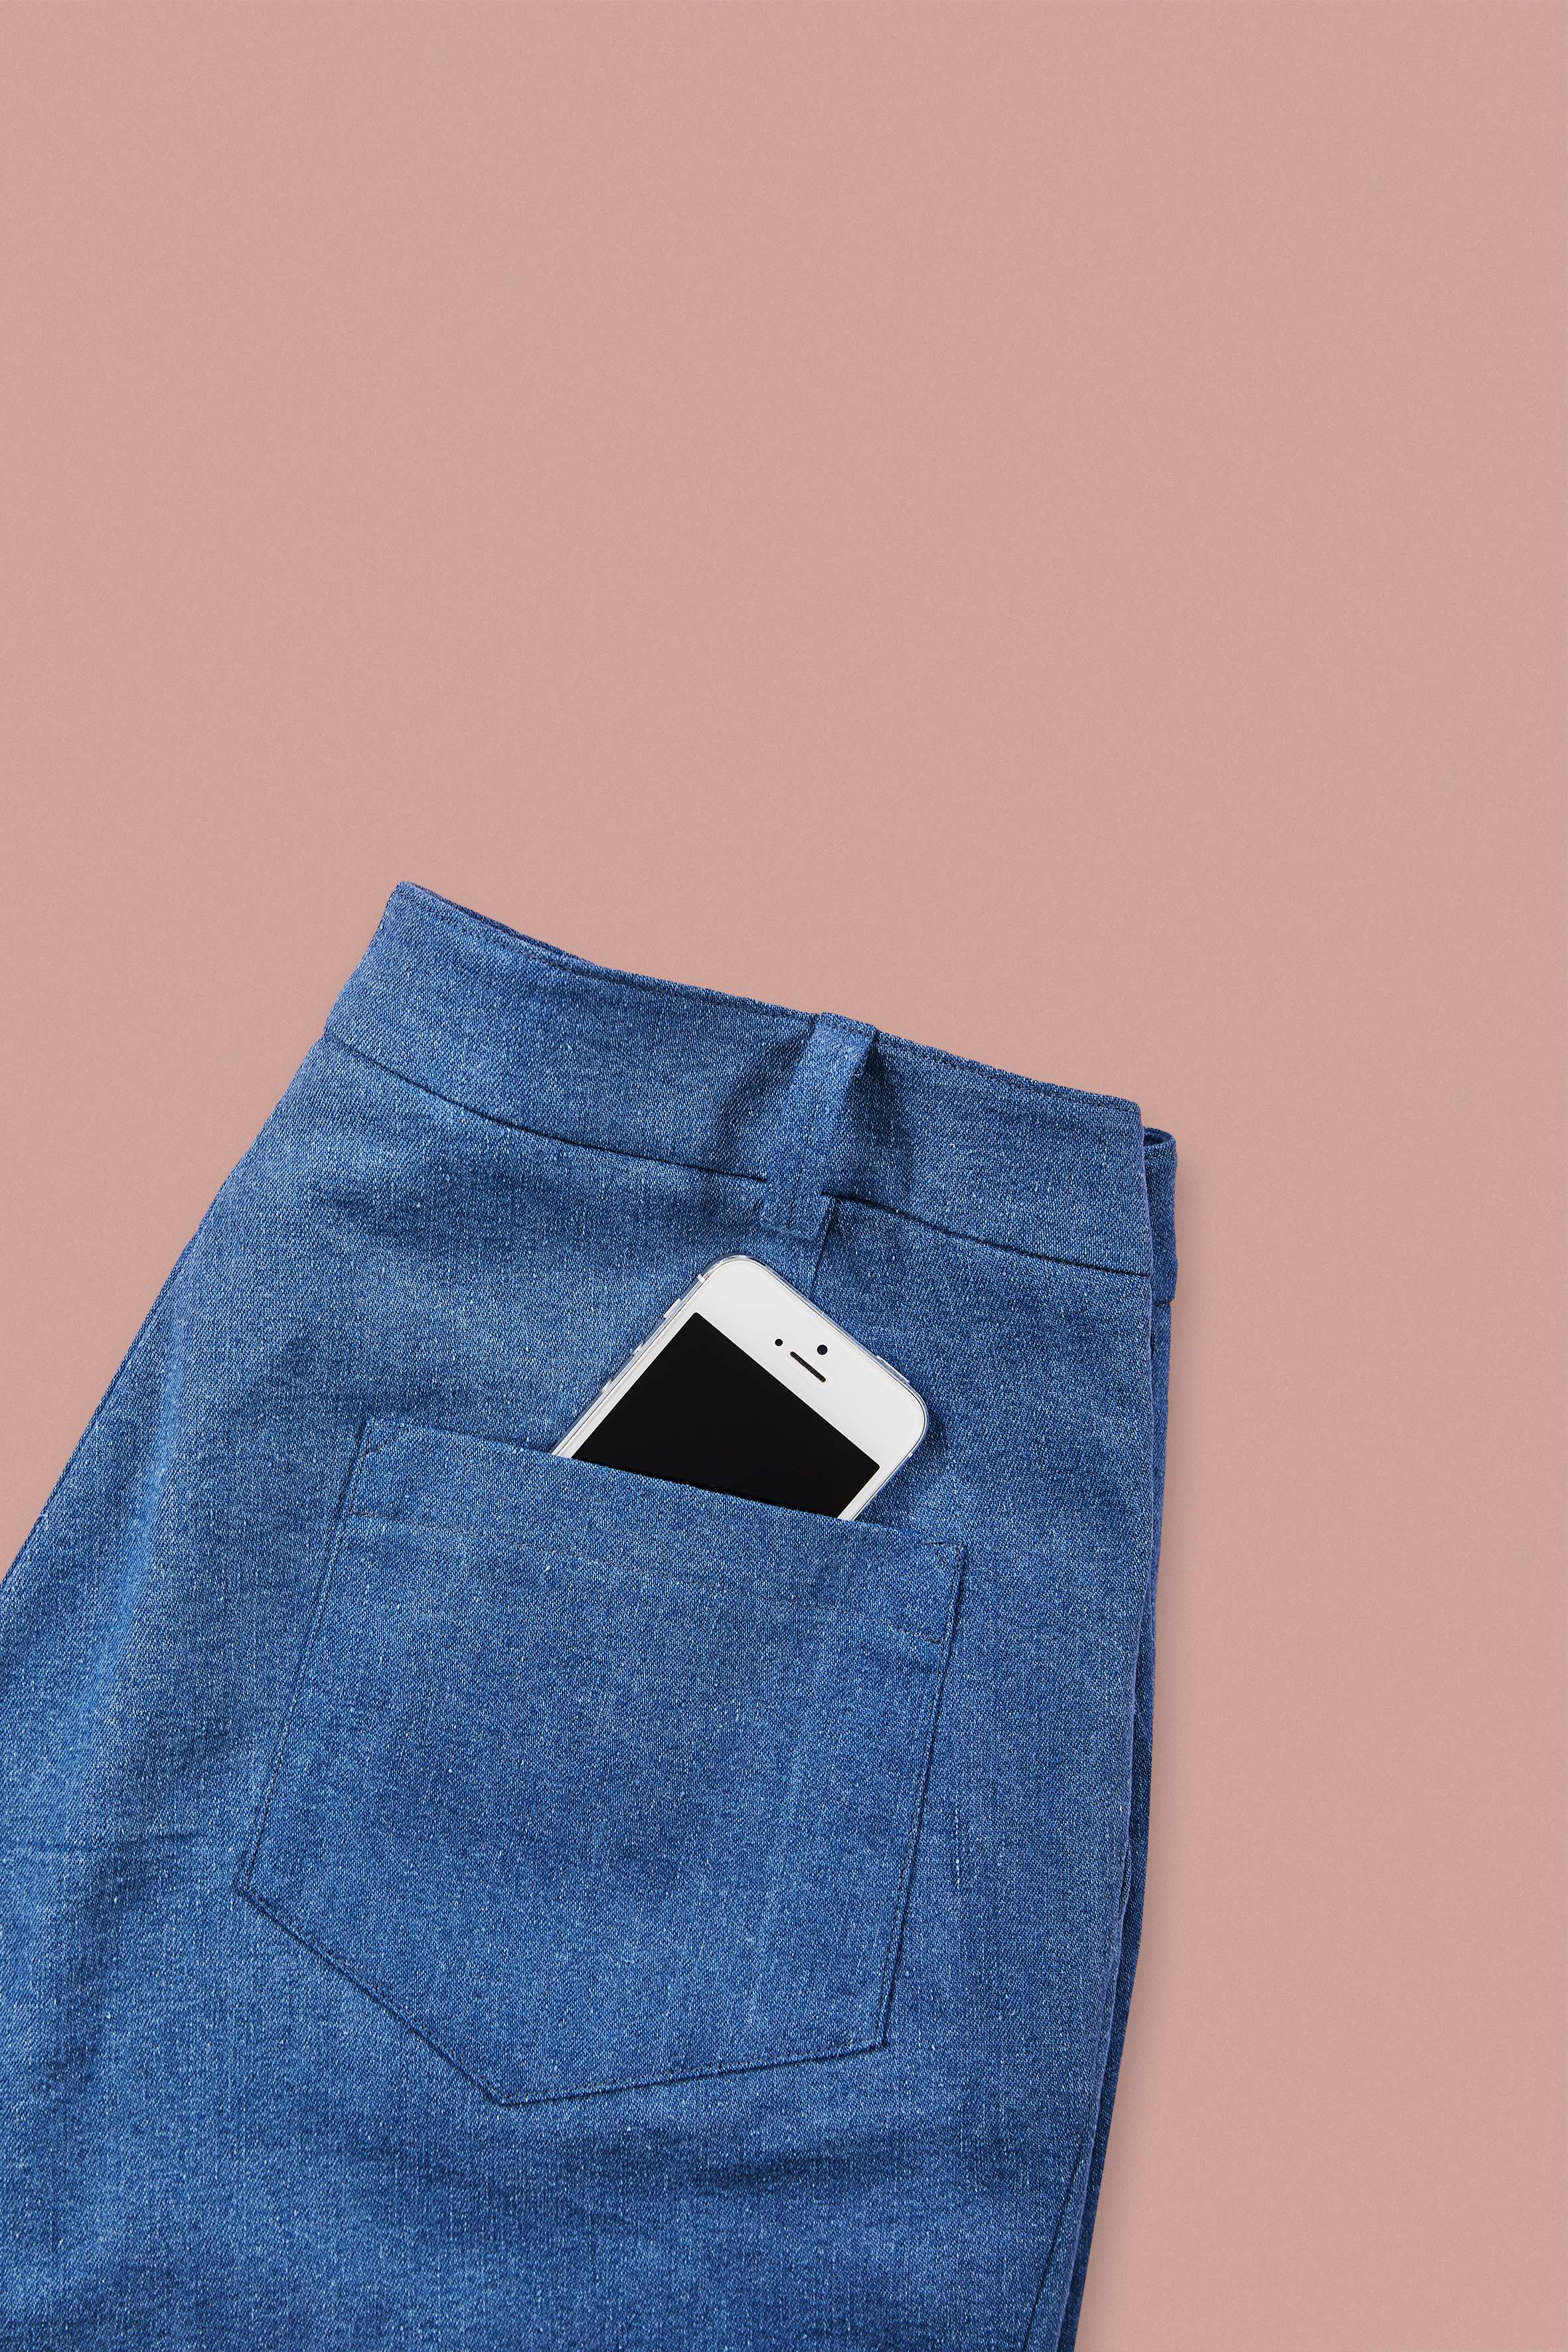 detailed view of pocket in blue denim shorts on rose background